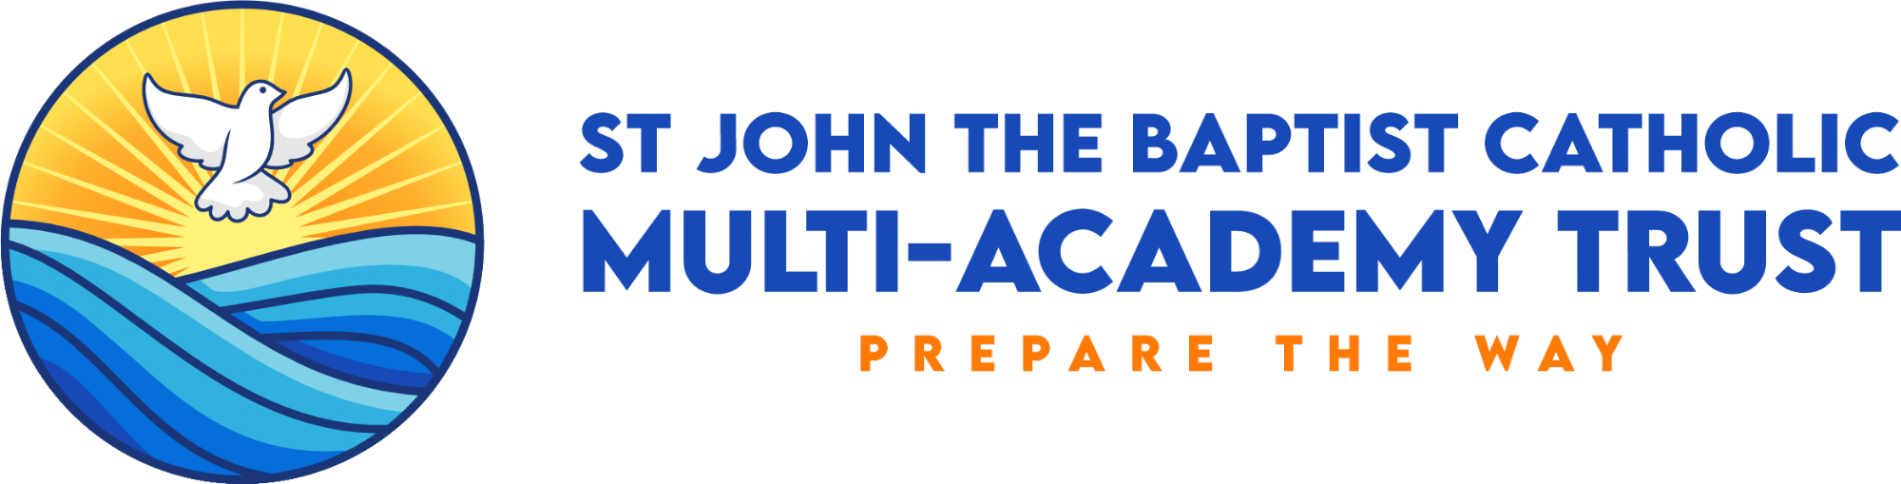 Saint John the Baptist Catholic Multi Academy Trust